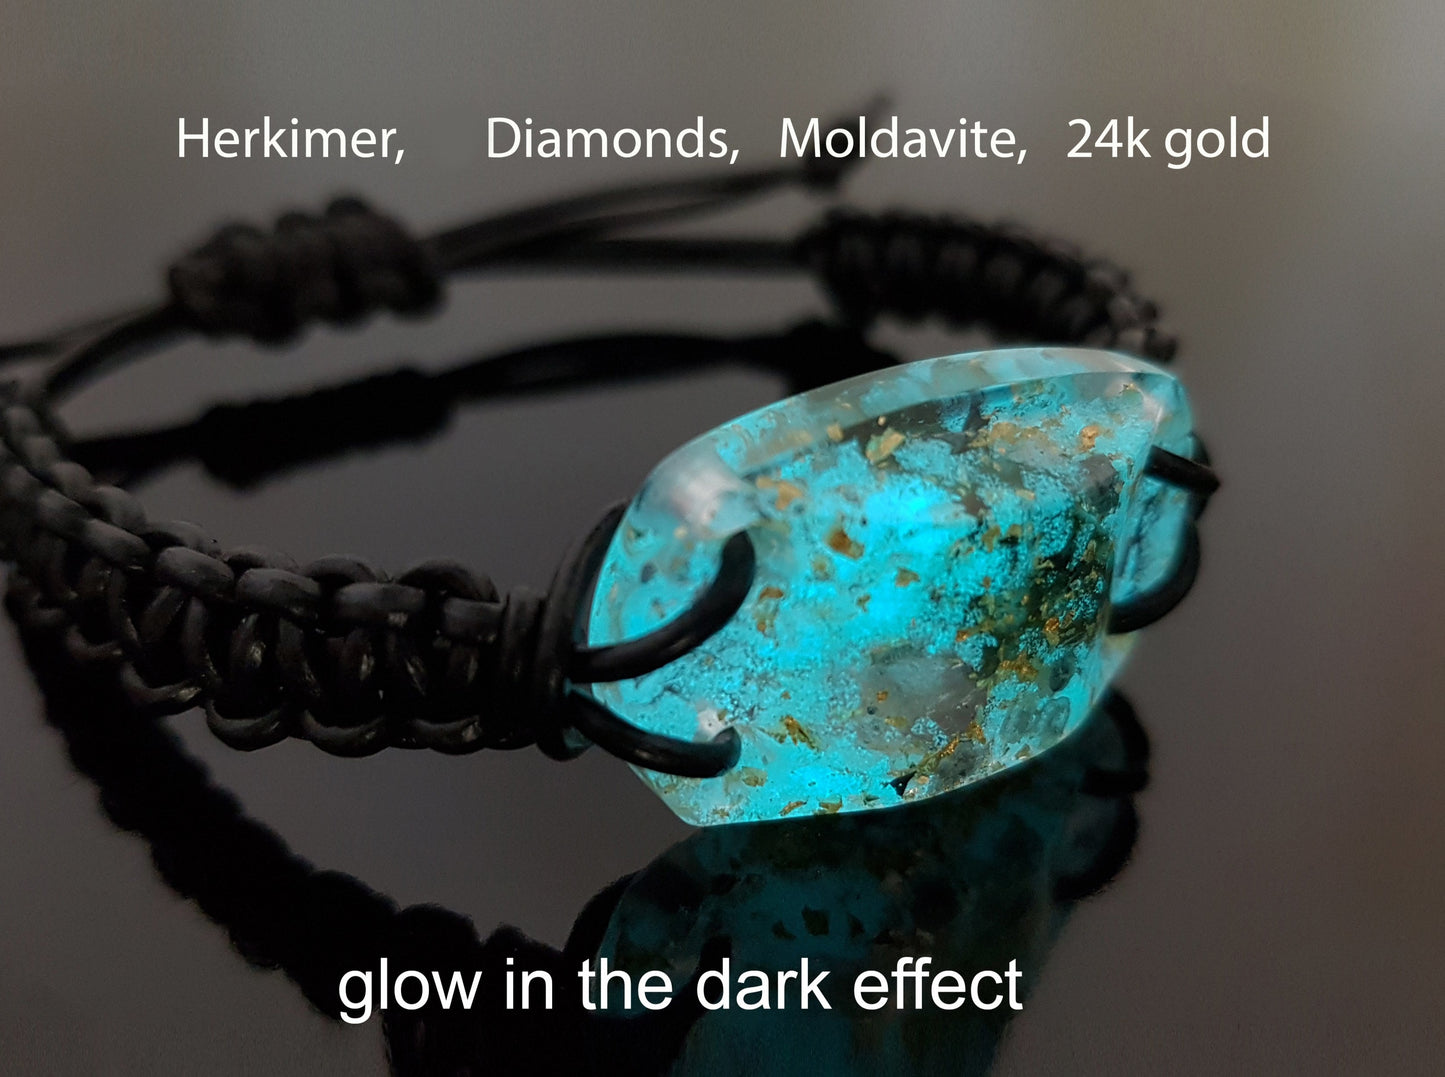 Orgonite orgone bracelet, Most powerful, 24k gold, Diamonds, Herkimer, Moldavite, glow in the dark